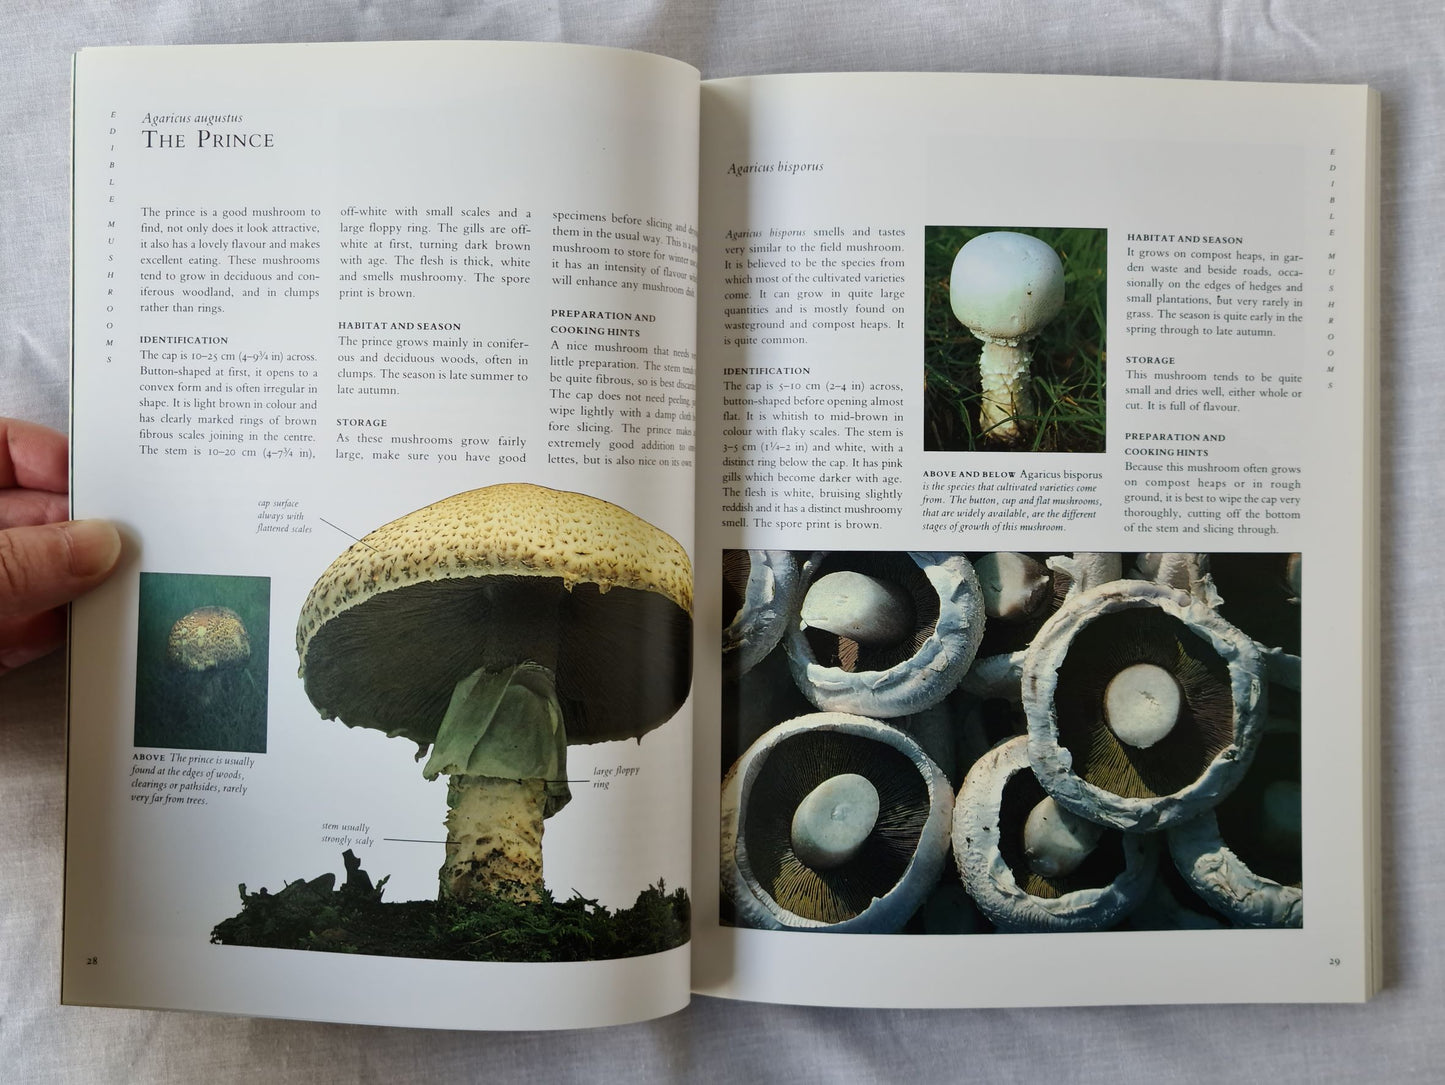 Mushroom Identifier by Peter Jordan